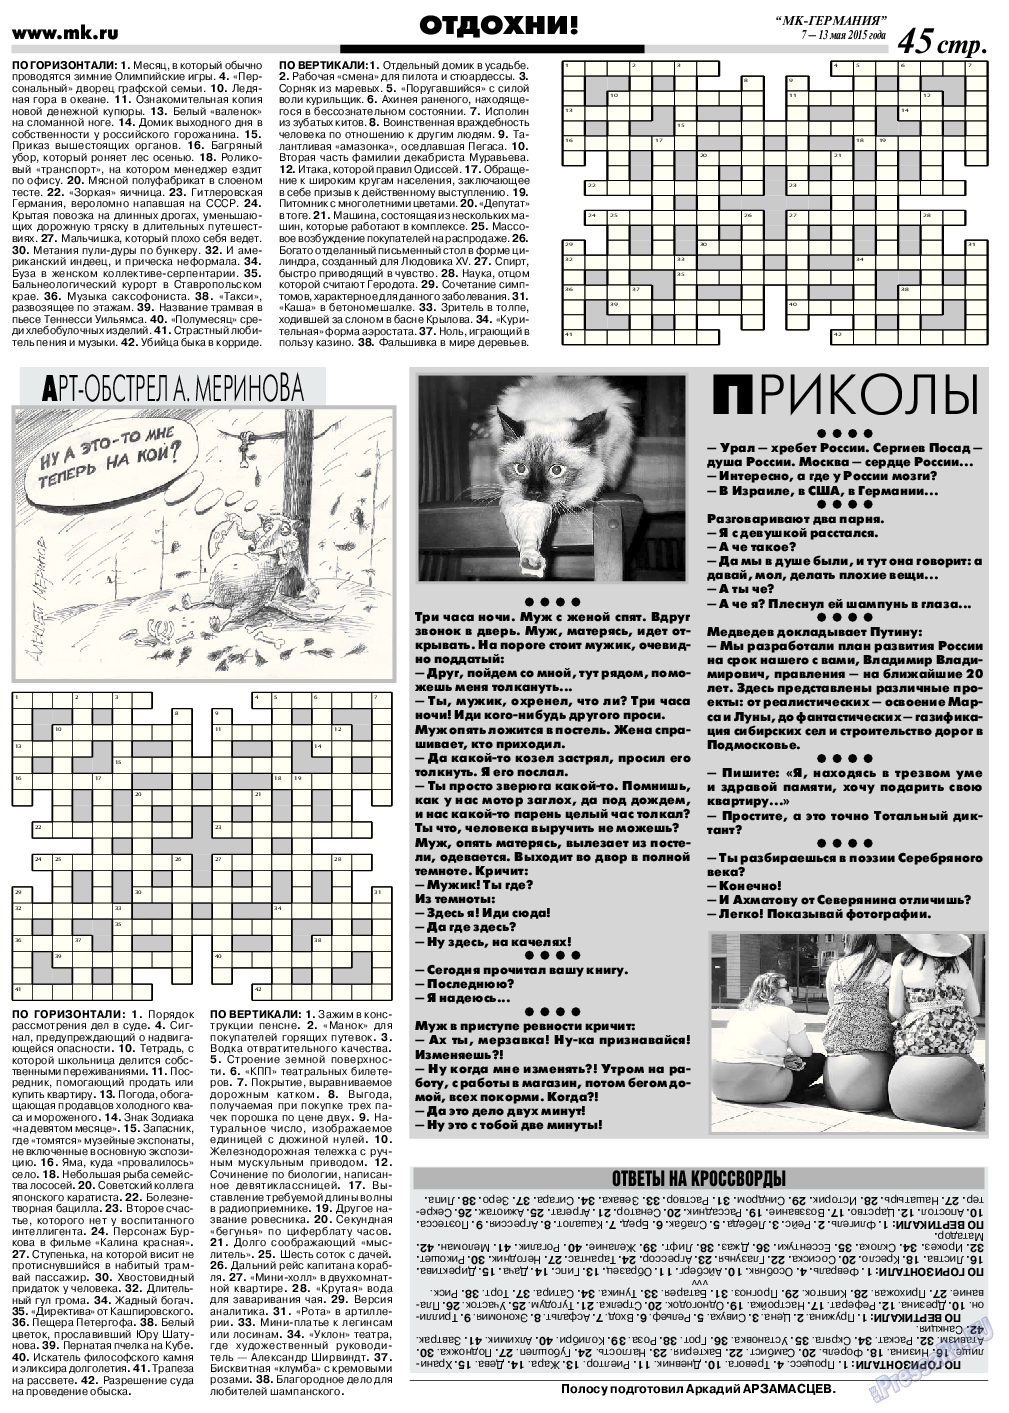 МК-Германия, газета. 2015 №19 стр.45